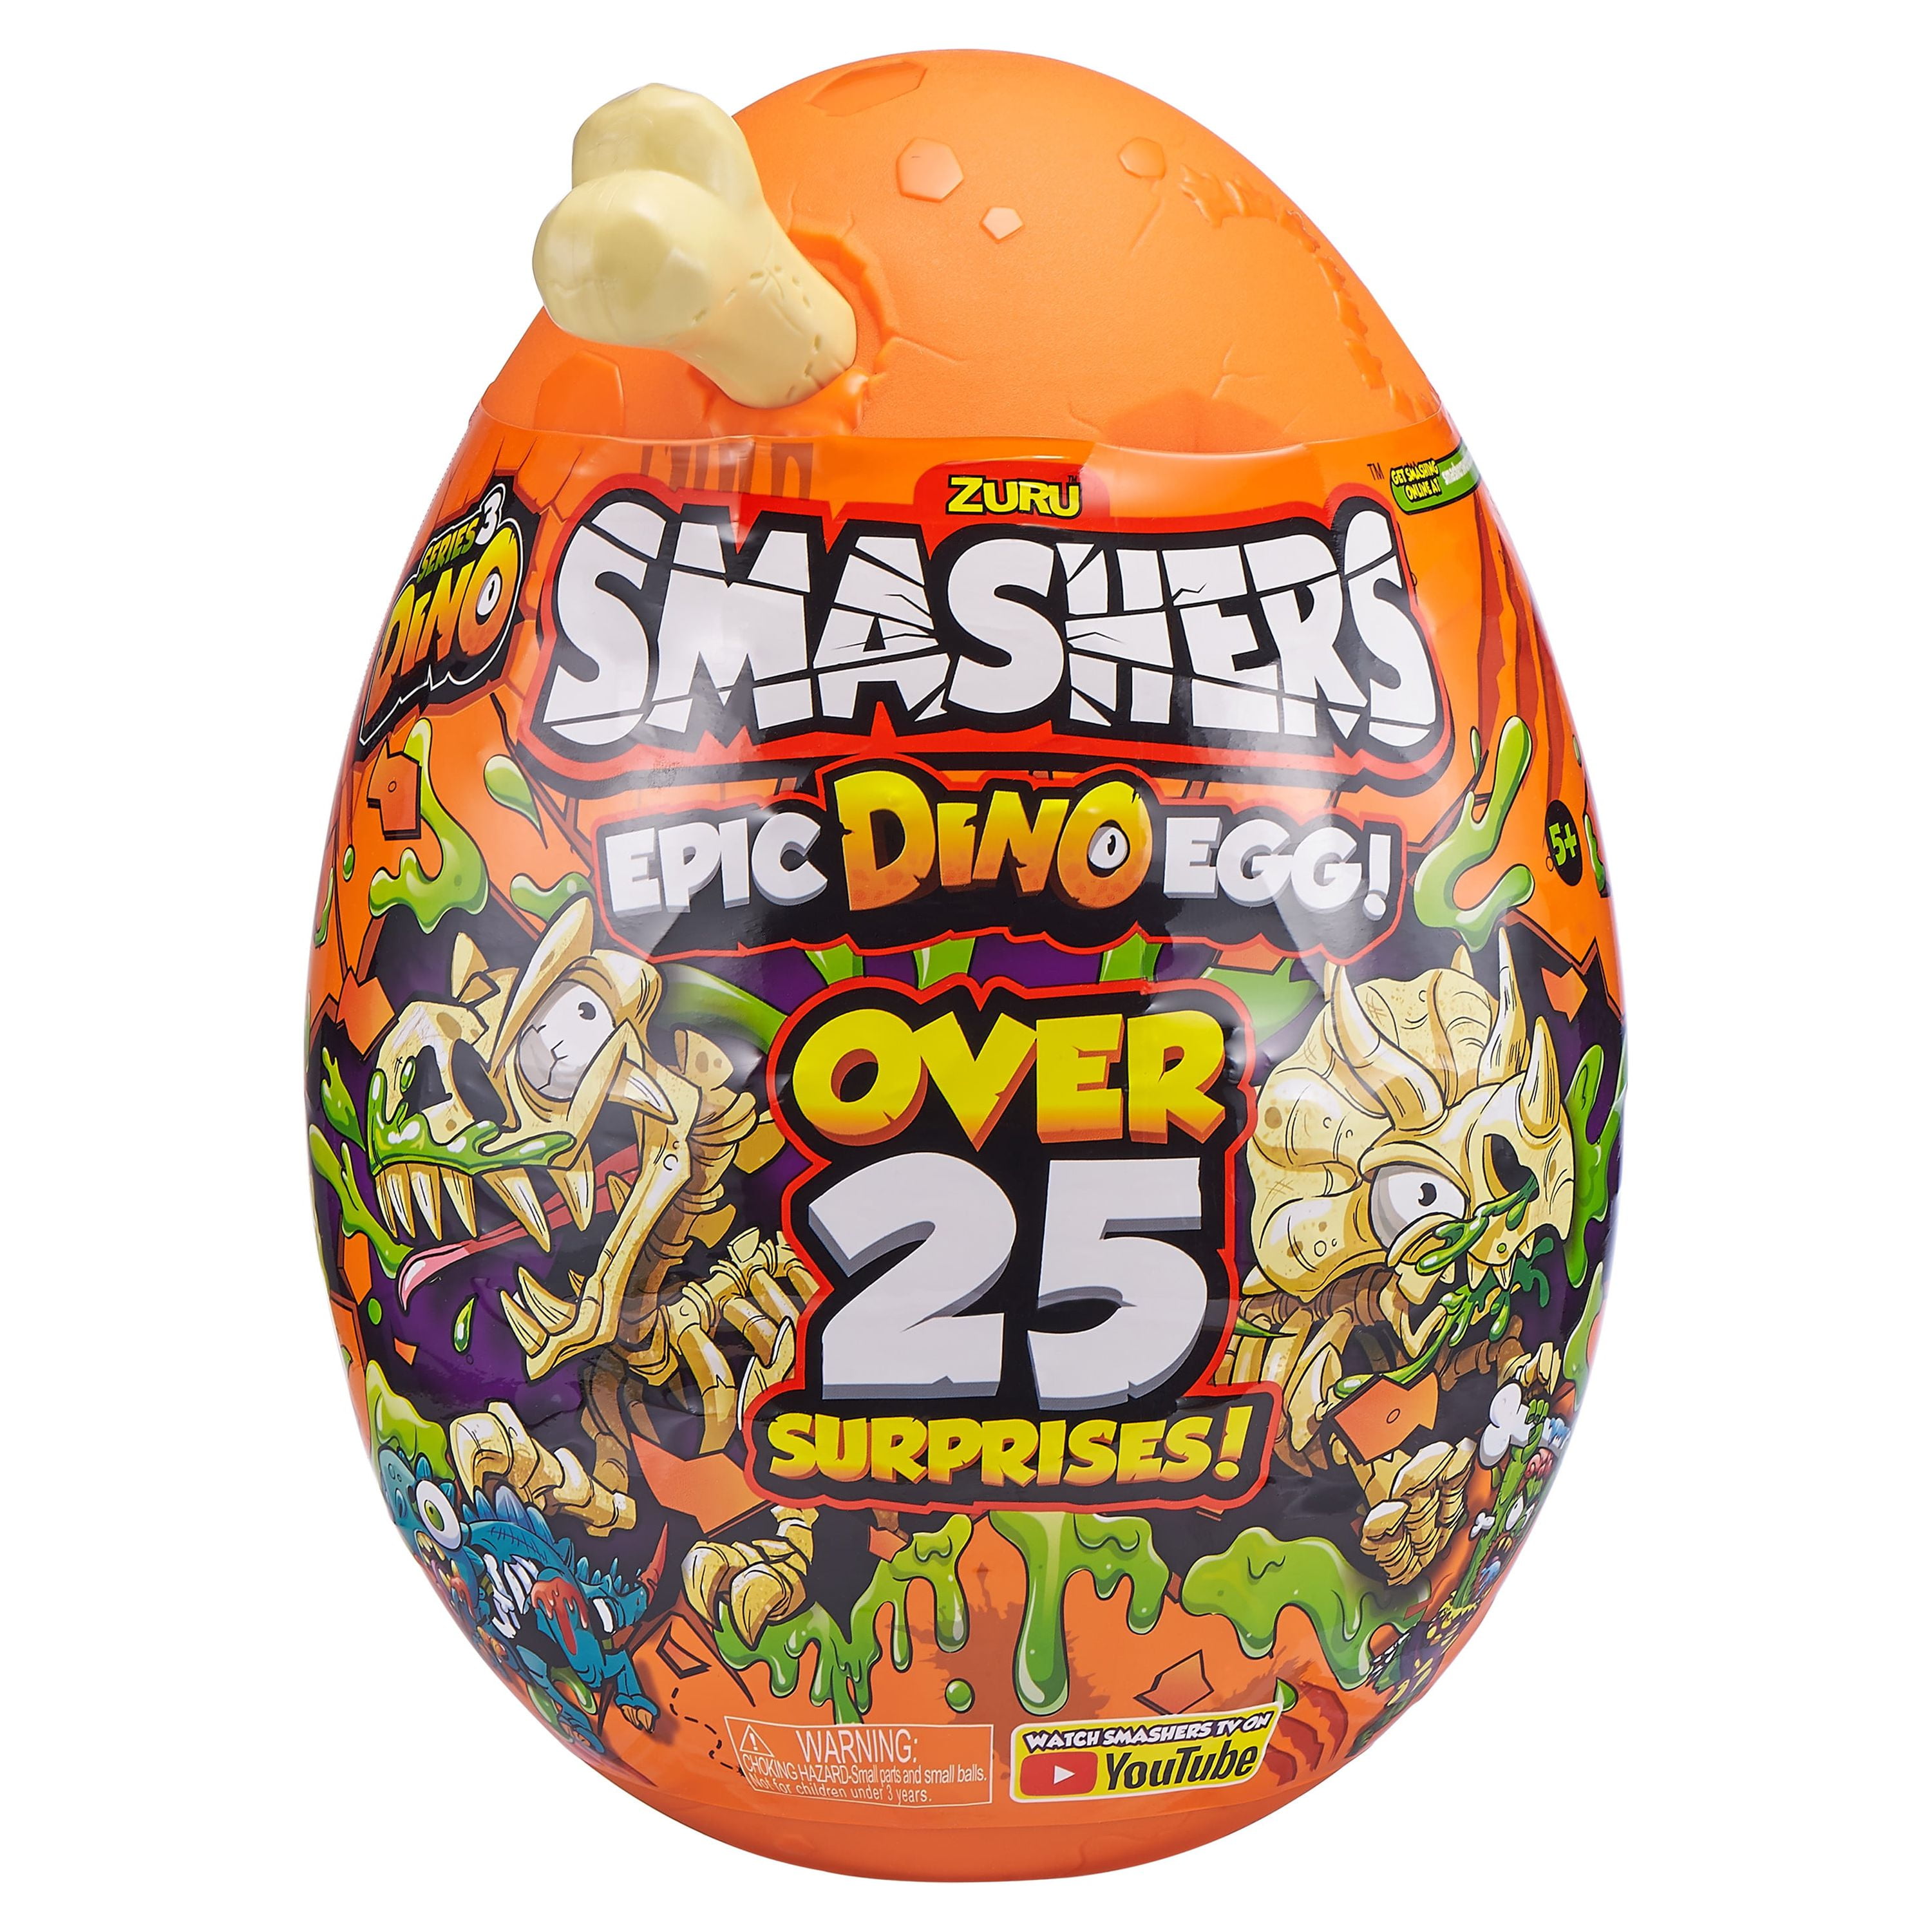 Smashers Epic Dino Egg Collectibles Series 3 Dino by ZURU